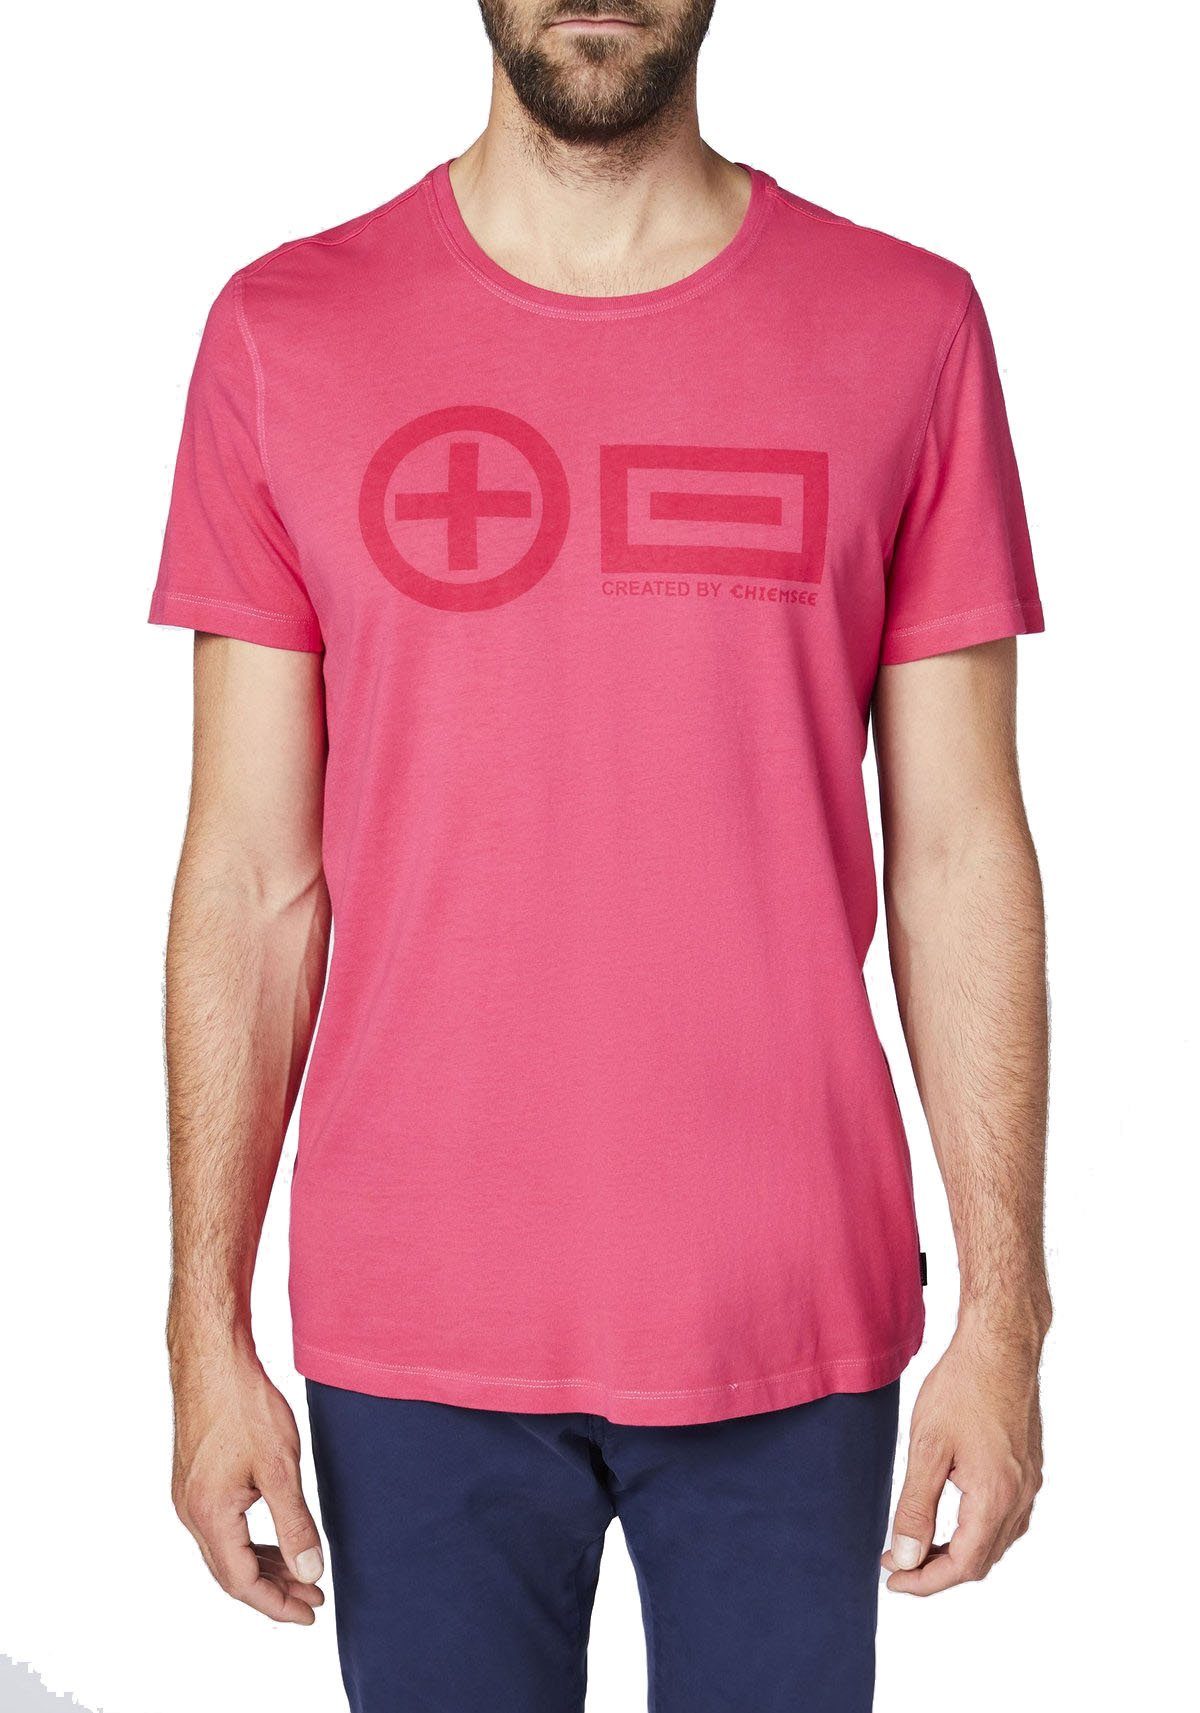 Rundhals, - Baumwolle SABANG, Herren T-Shirt Chiemsee Pink T-Shirt